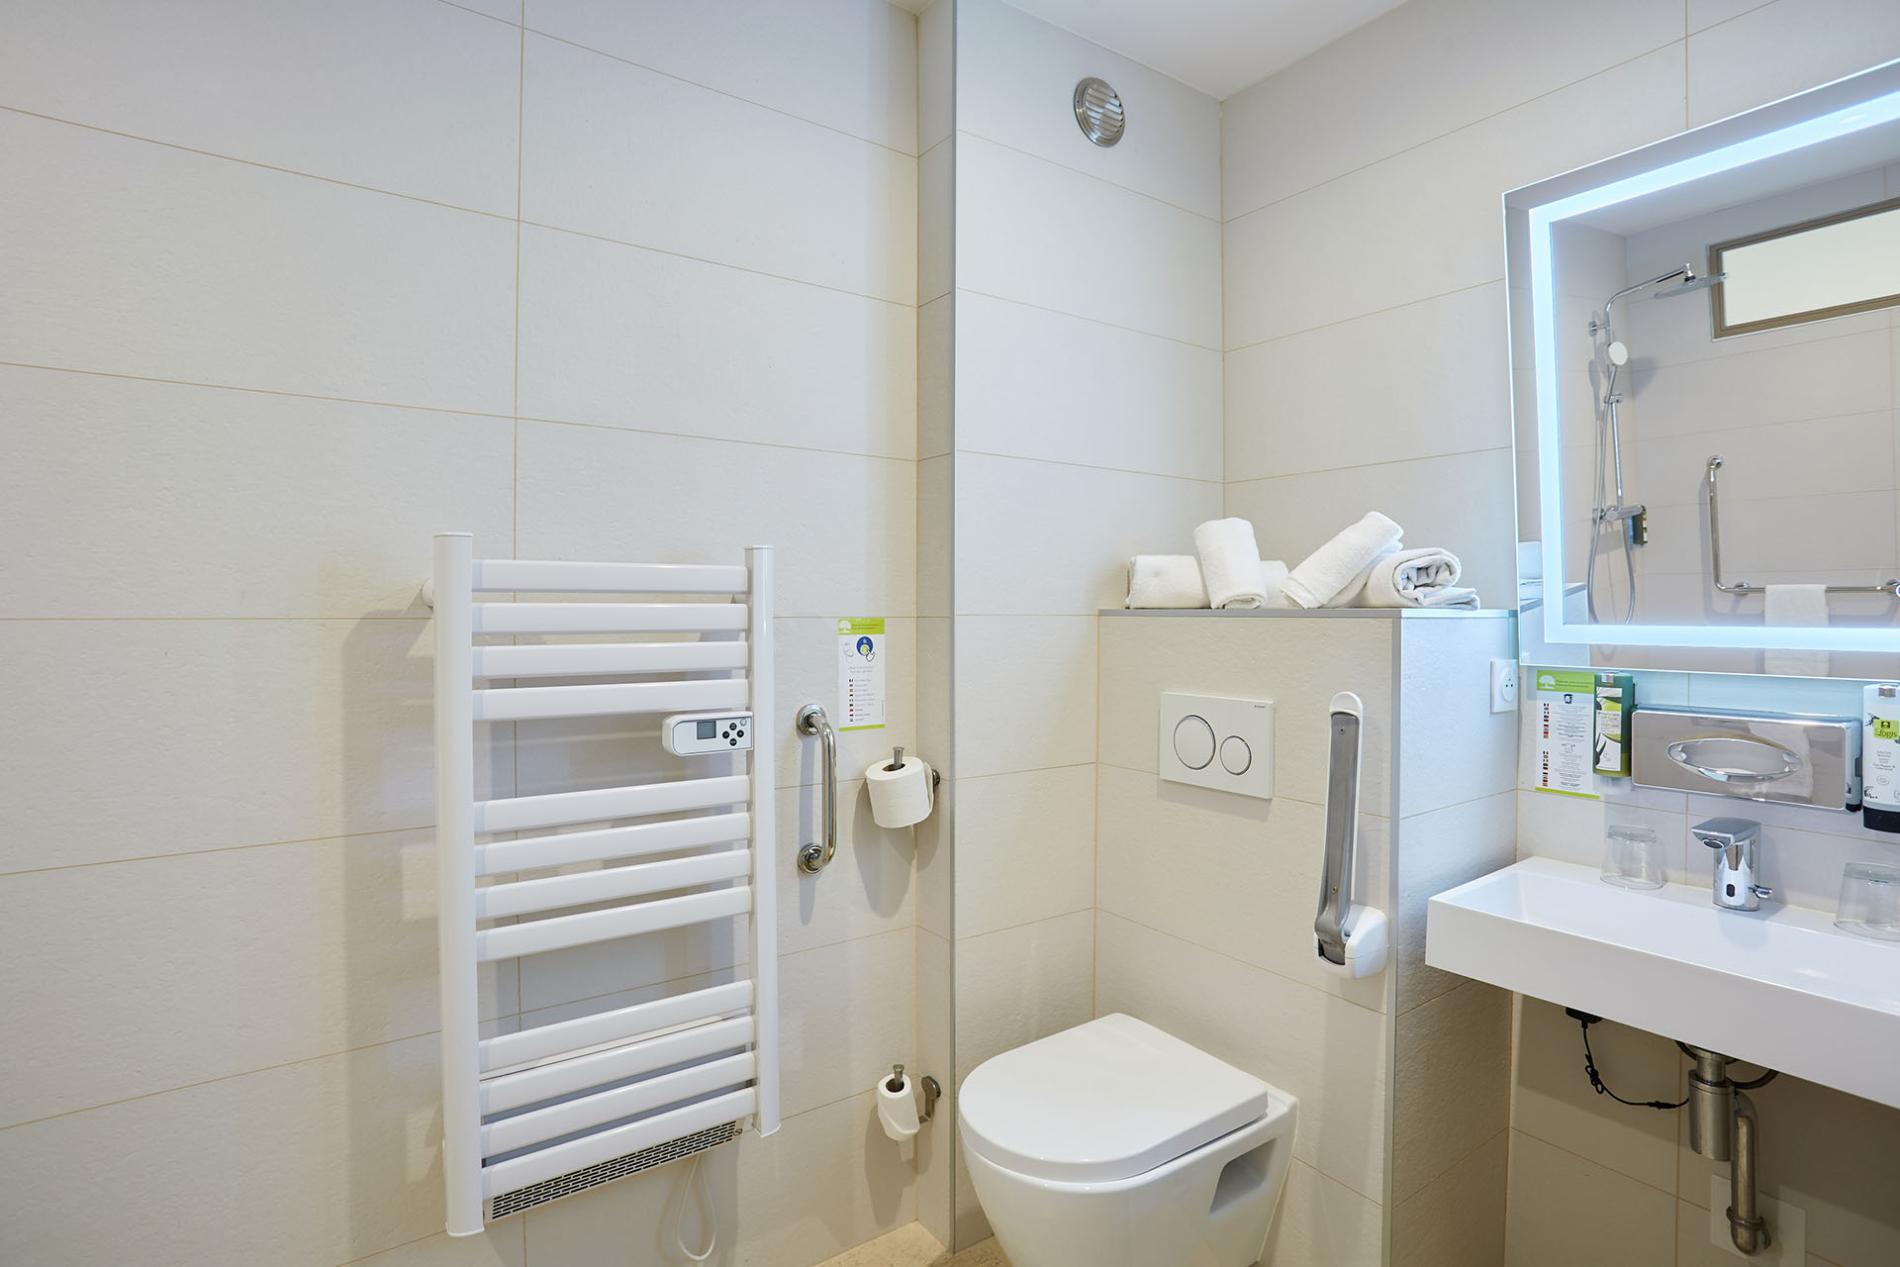 Bathroom with shower -Diability access